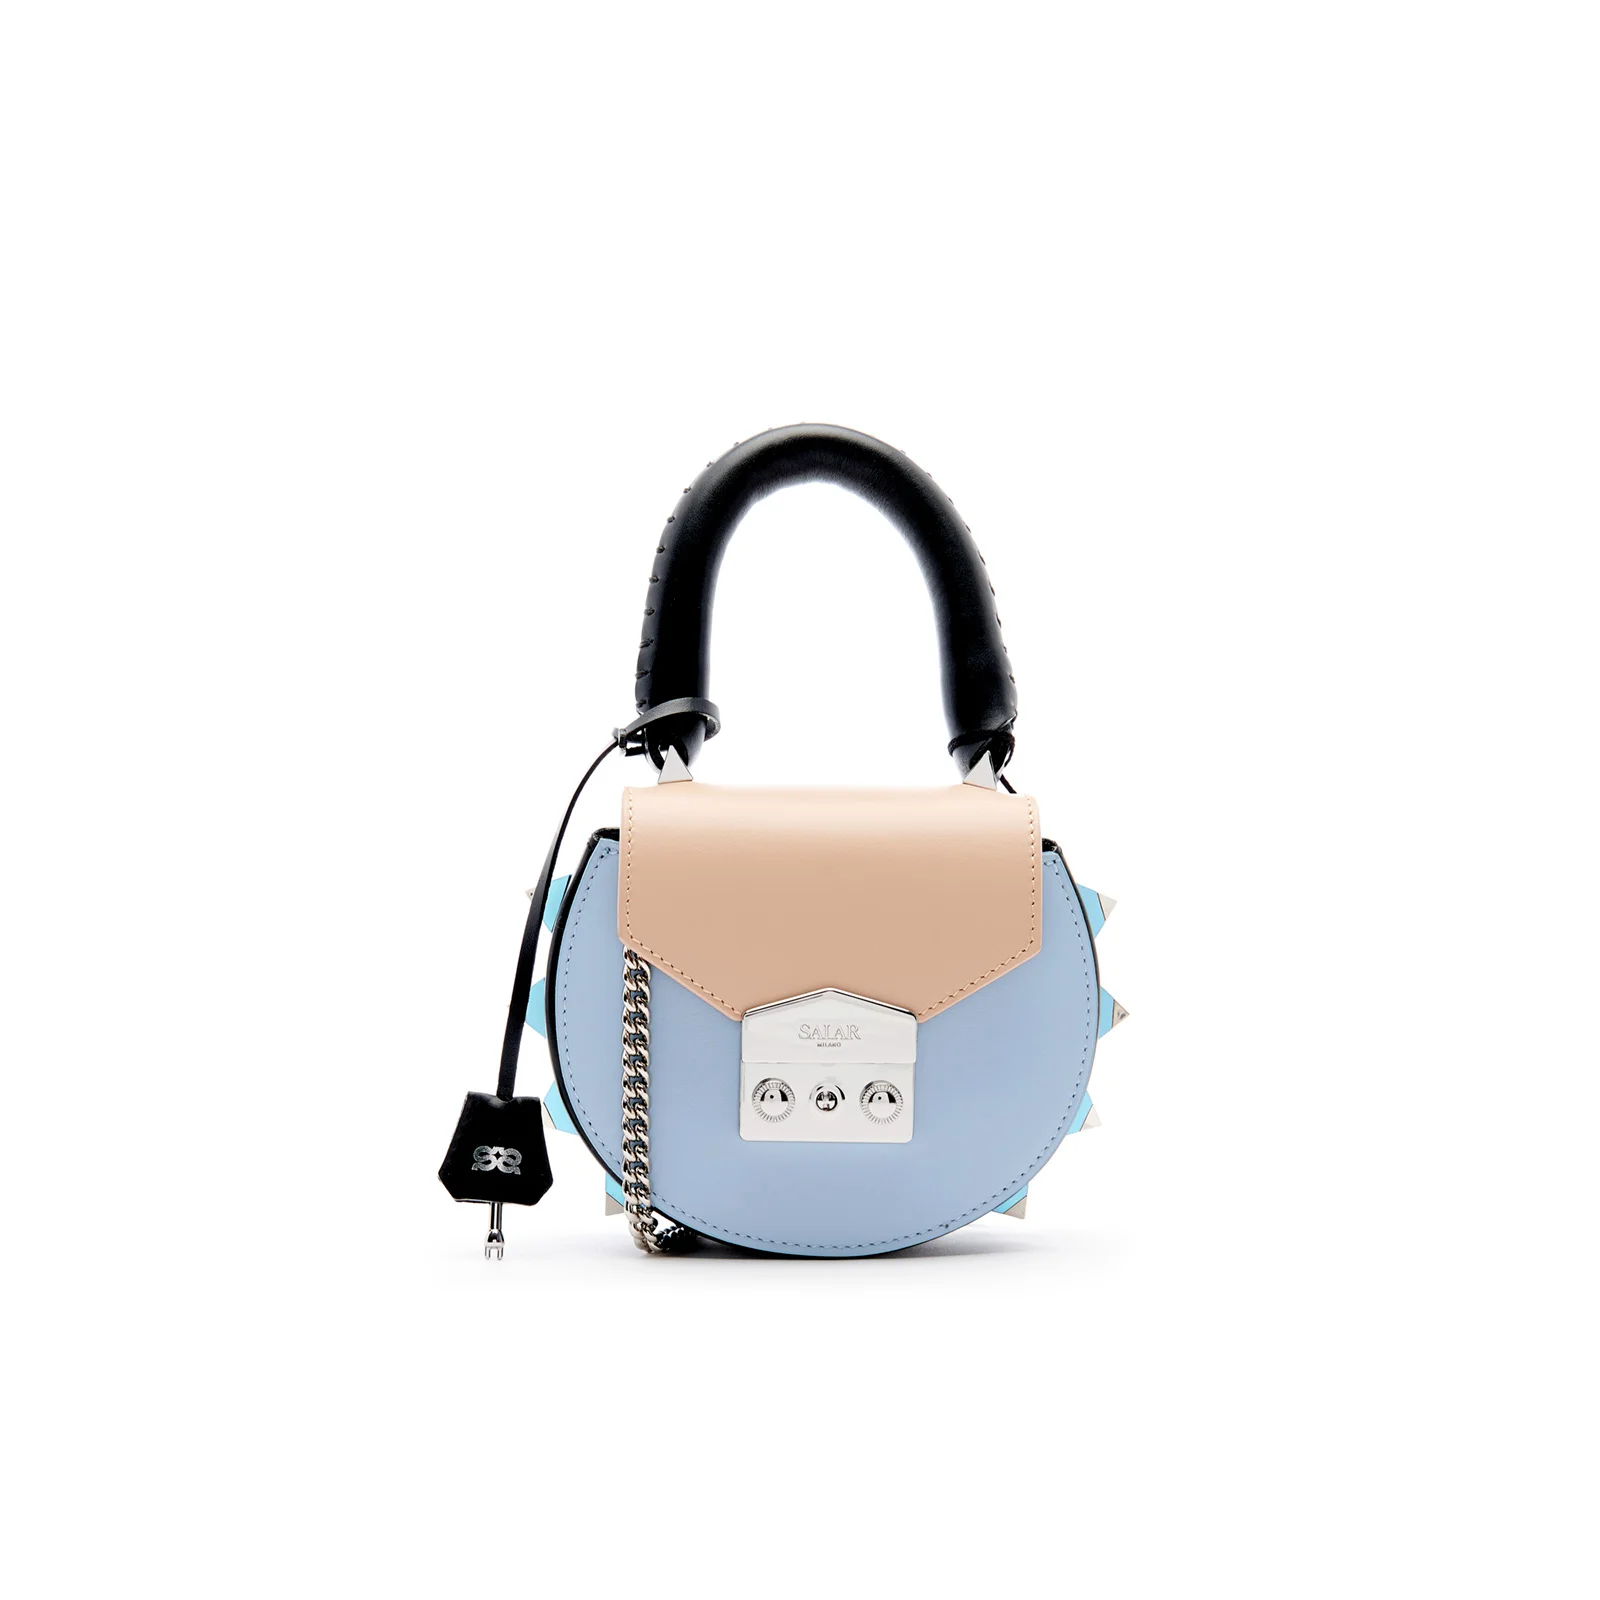 SALAR Women's Mimi Mini Bag - Nero/ Carne Image 1